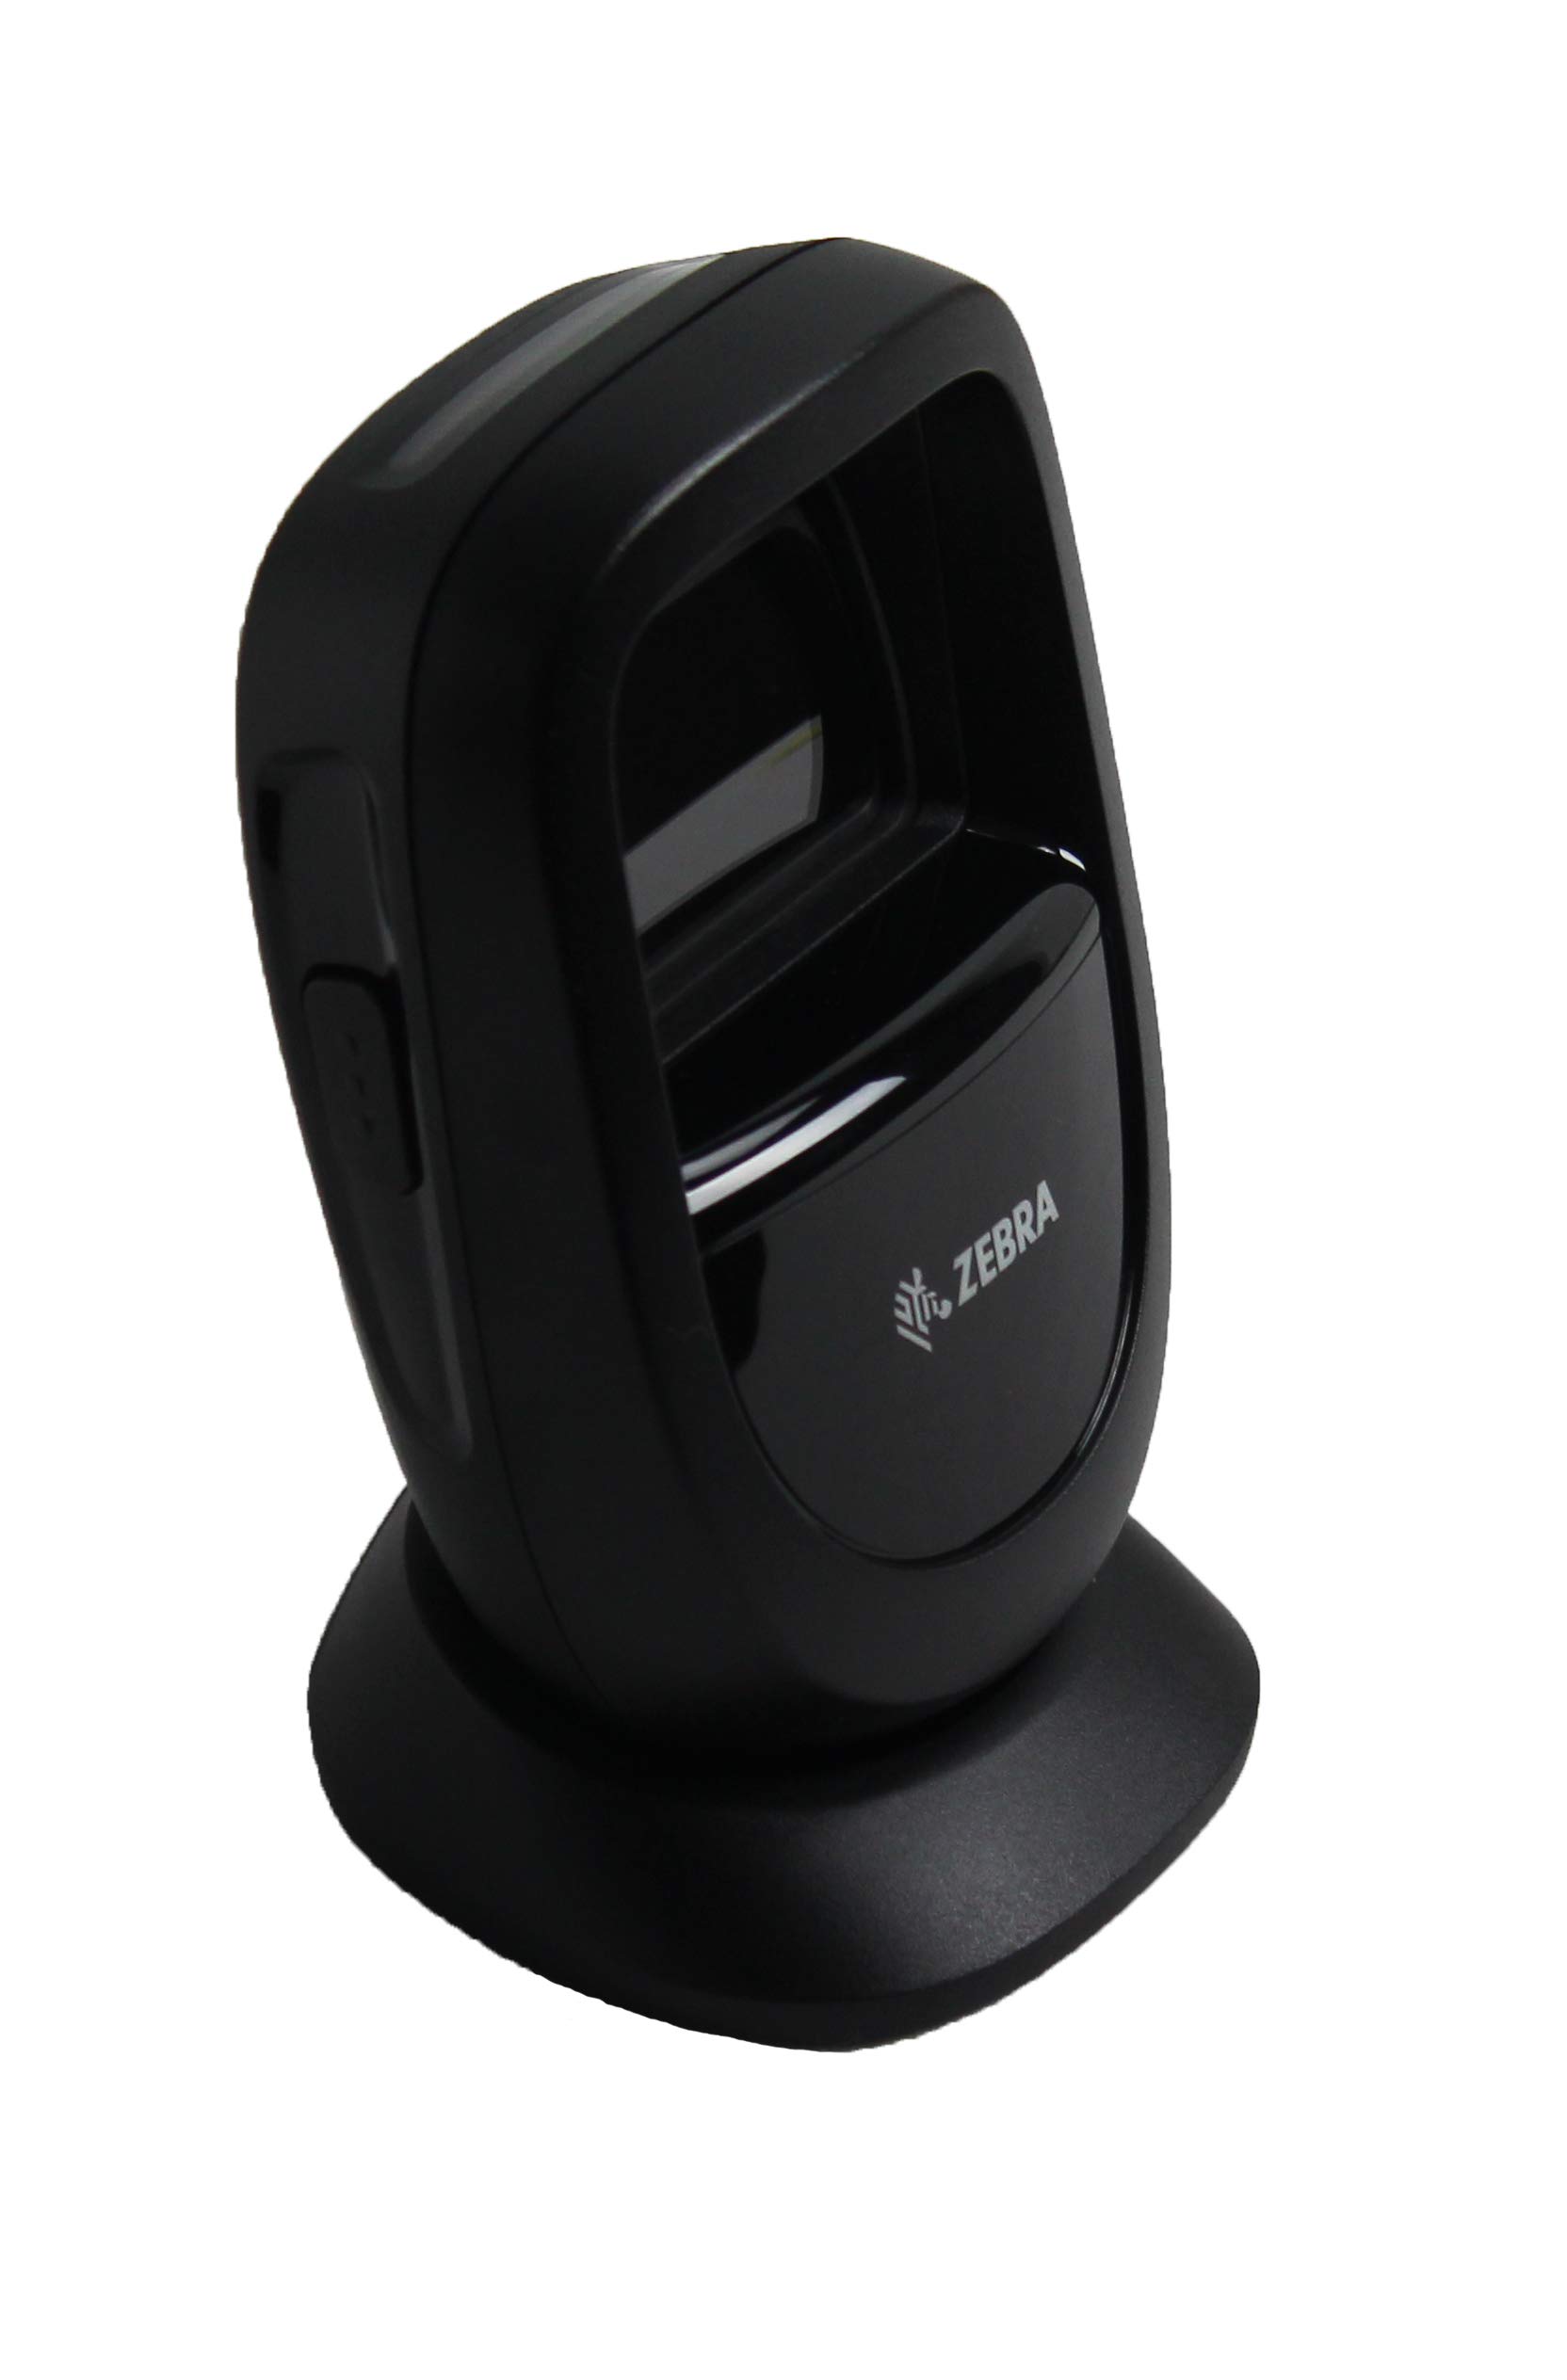 ZEBRA ENTERPRISE Zebra DS9308 Handheld Scanner with USB Connection (SR00004ZZWW)